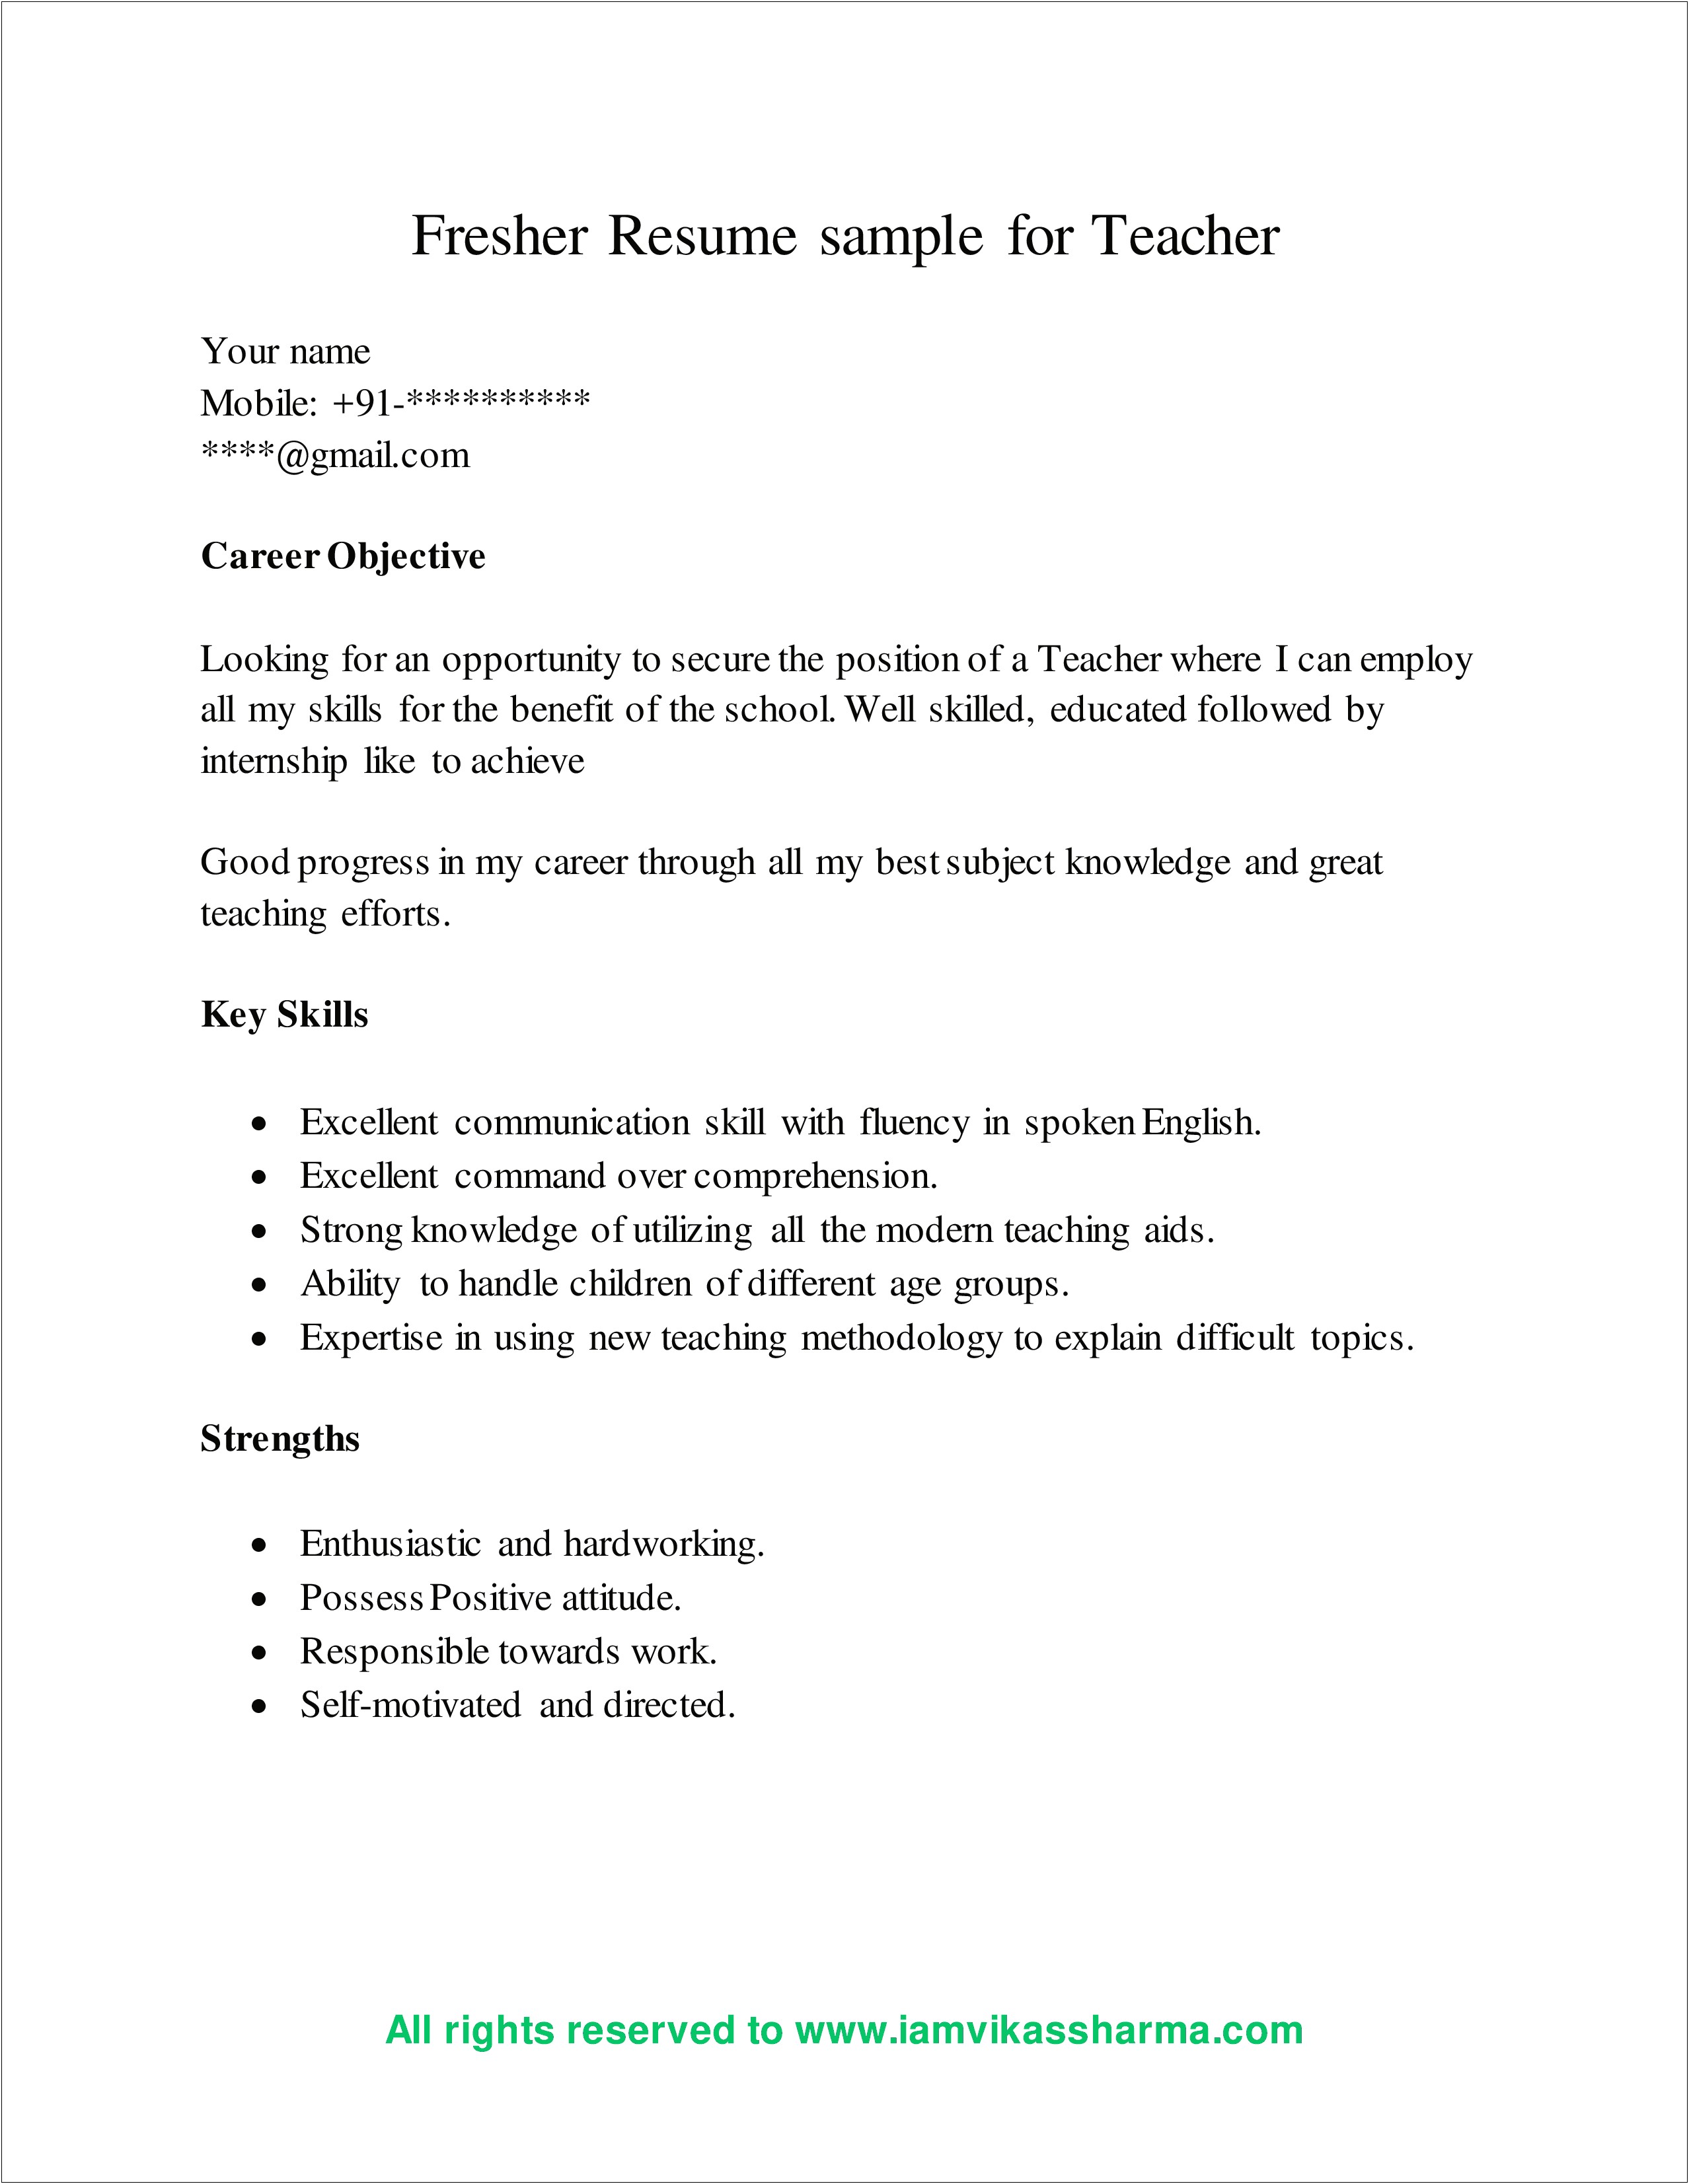 Resume For Teaching Job In School